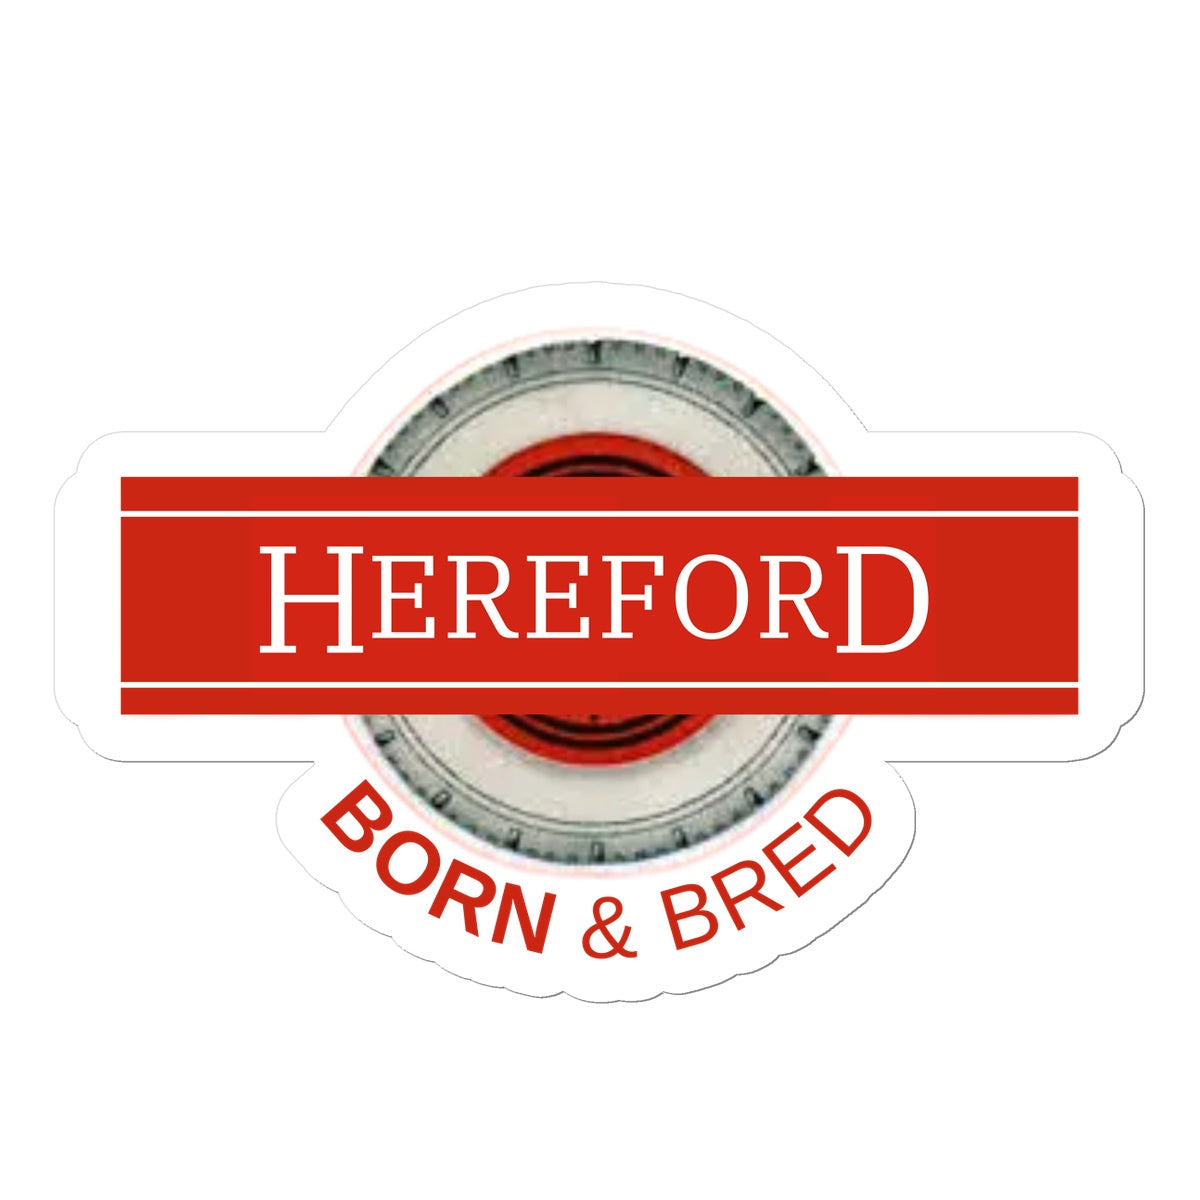 Hereford BORN & BRED Sticker